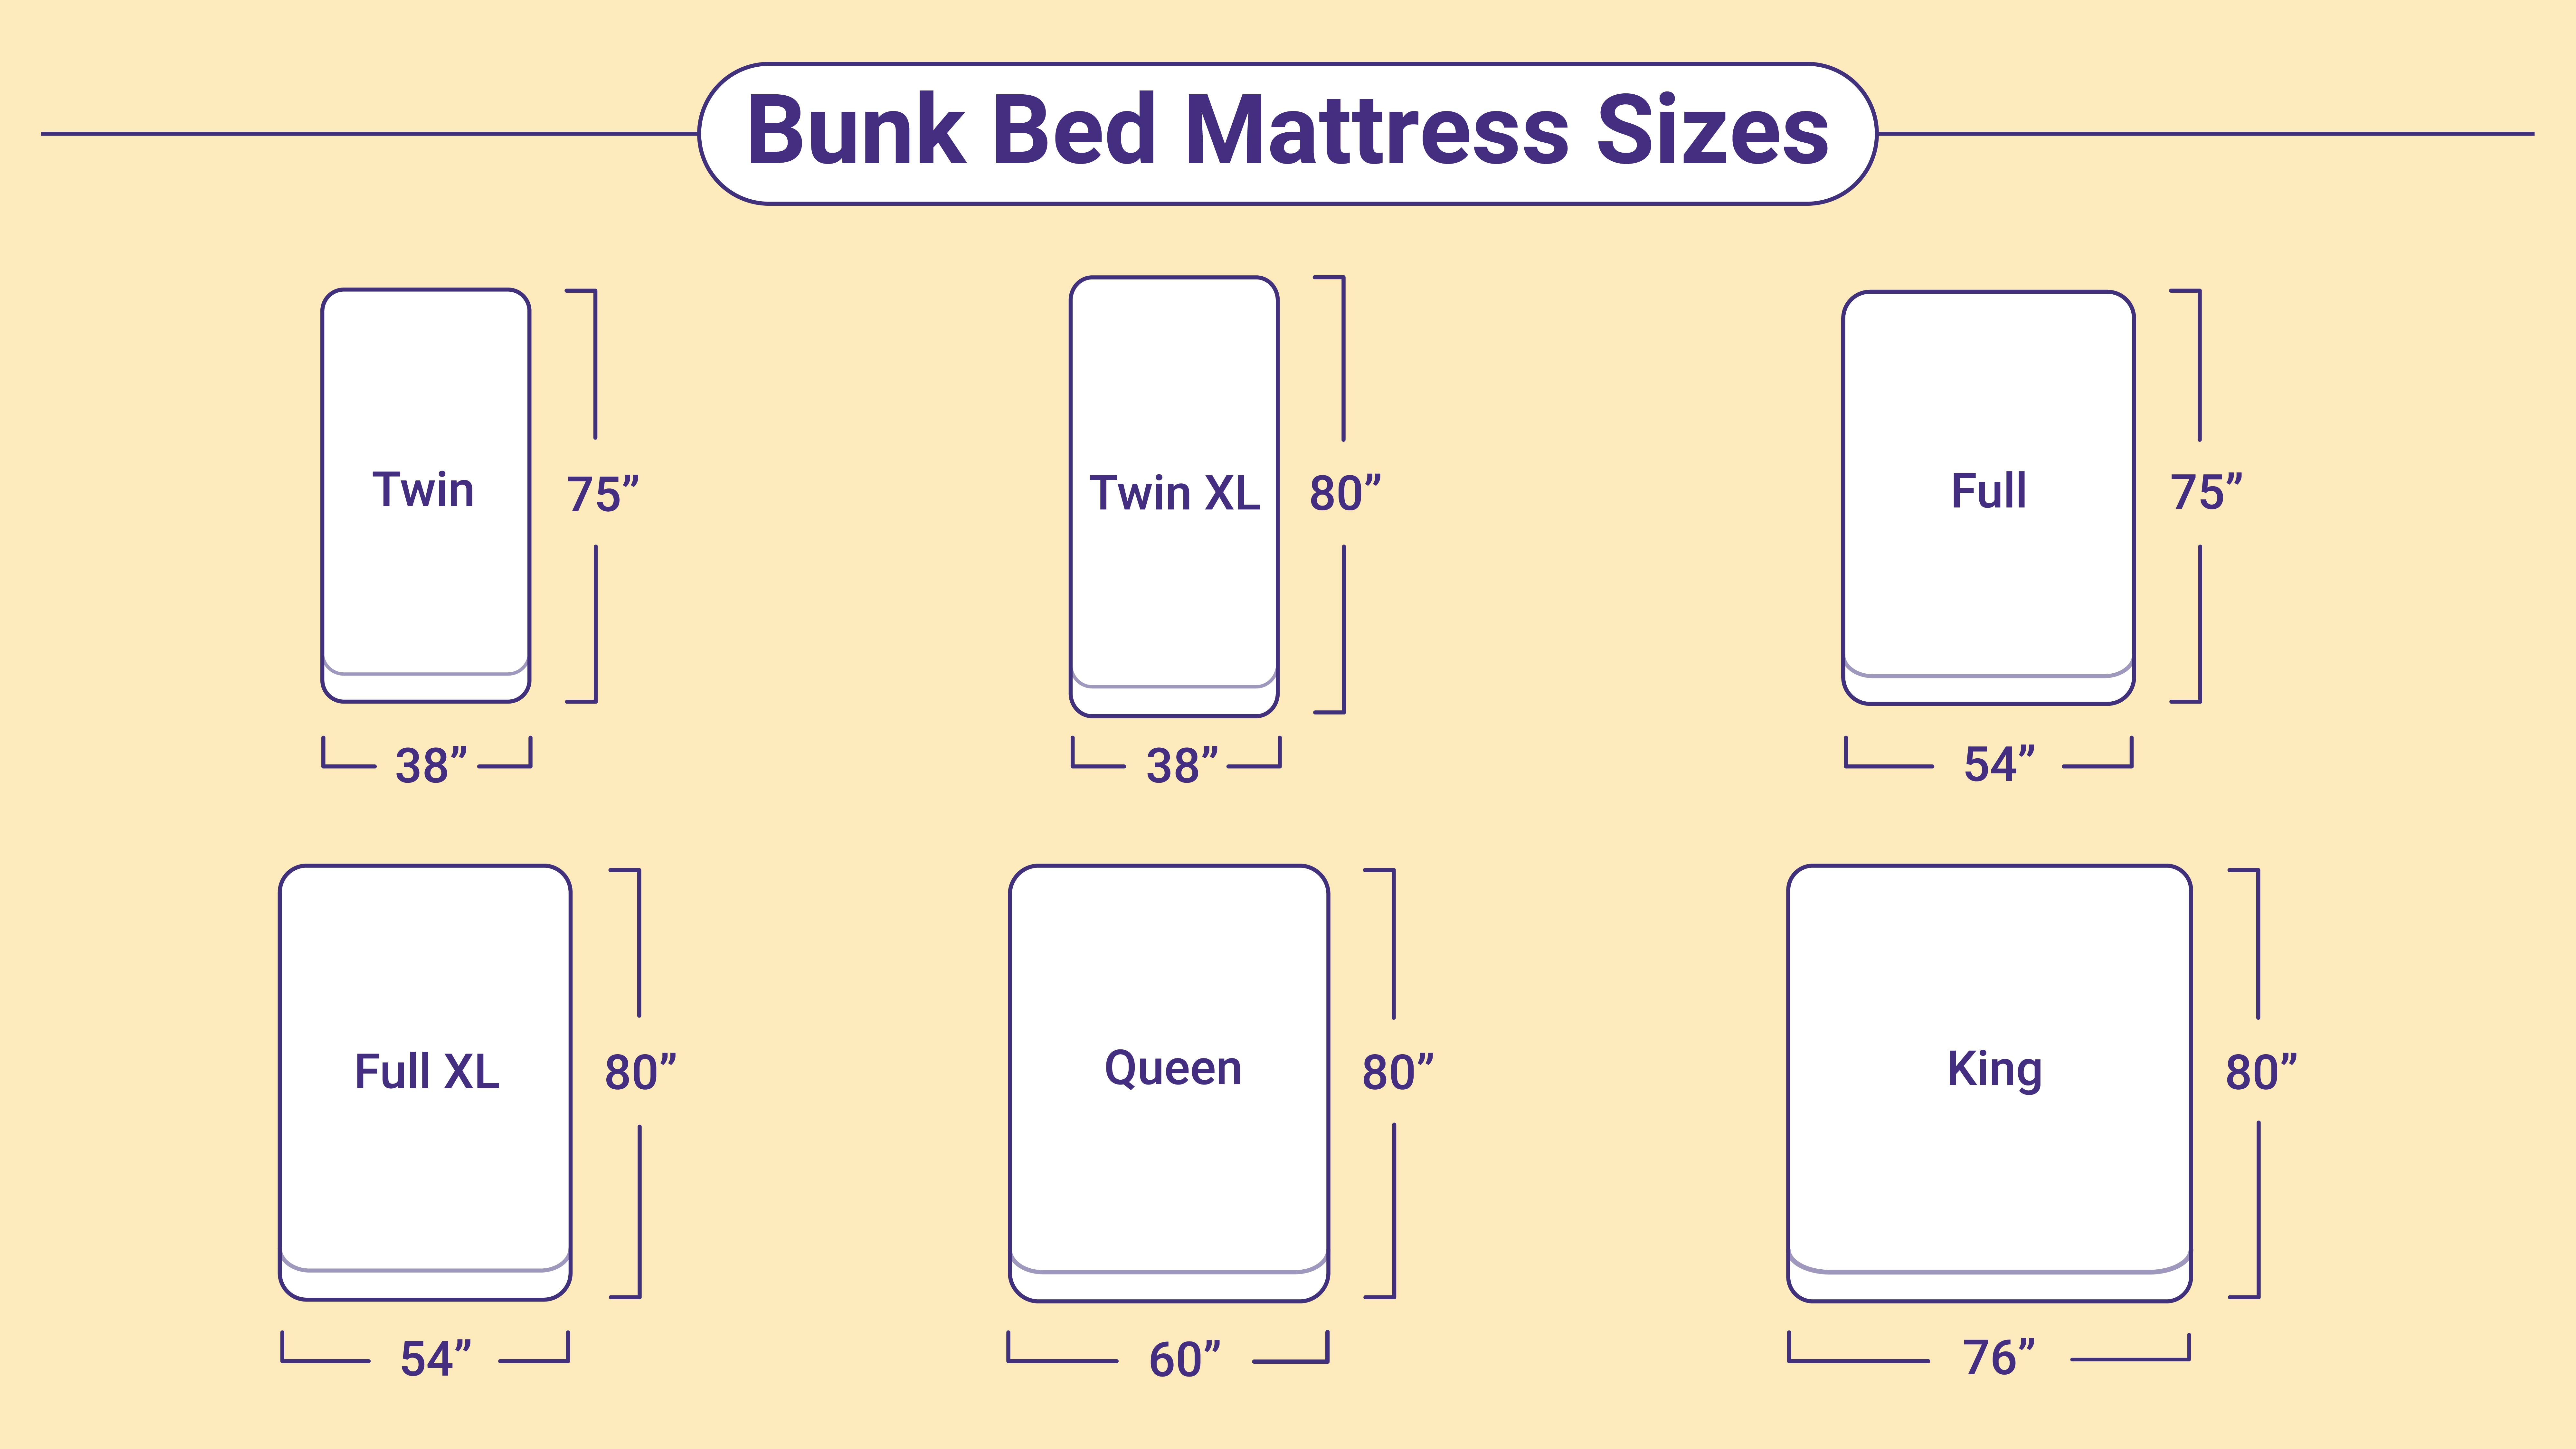 Bunk Bed Mattress Sizes SJ 01 